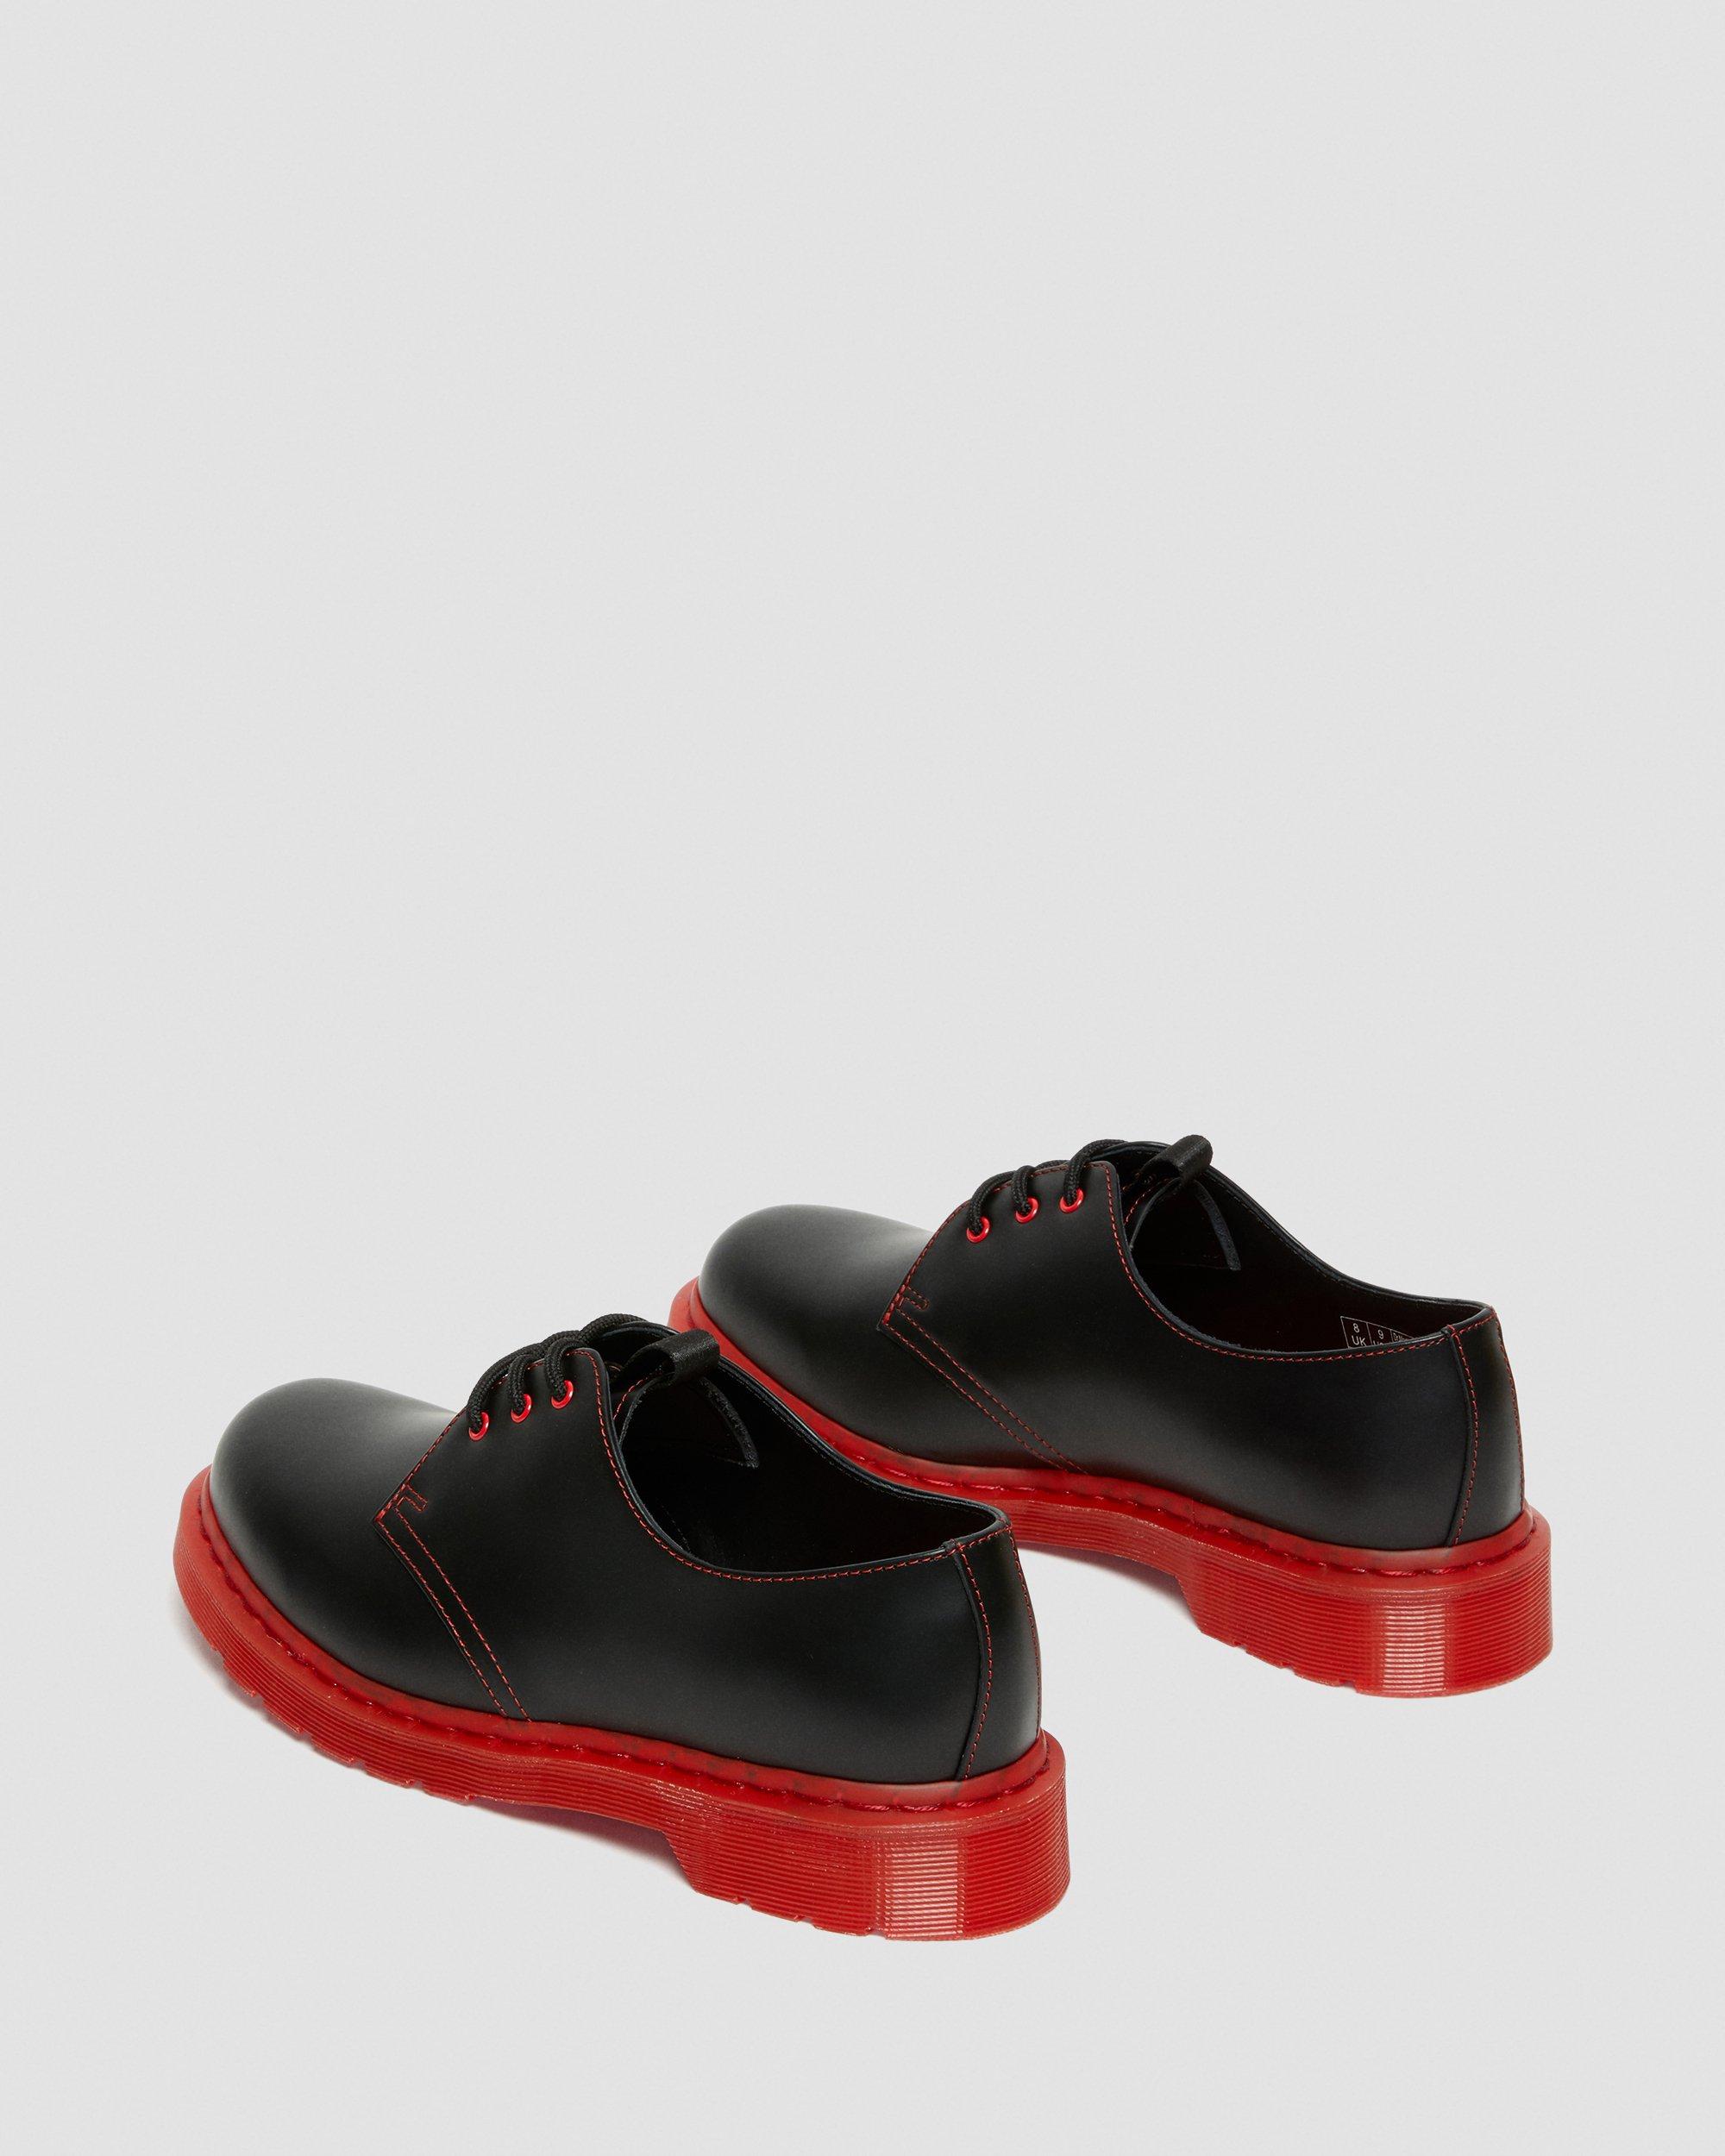 https://i1.adis.ws/i/drmartens/27153001.88.jpg?$large$Chaussures 1461 CLOT en Cuir Dr. Martens